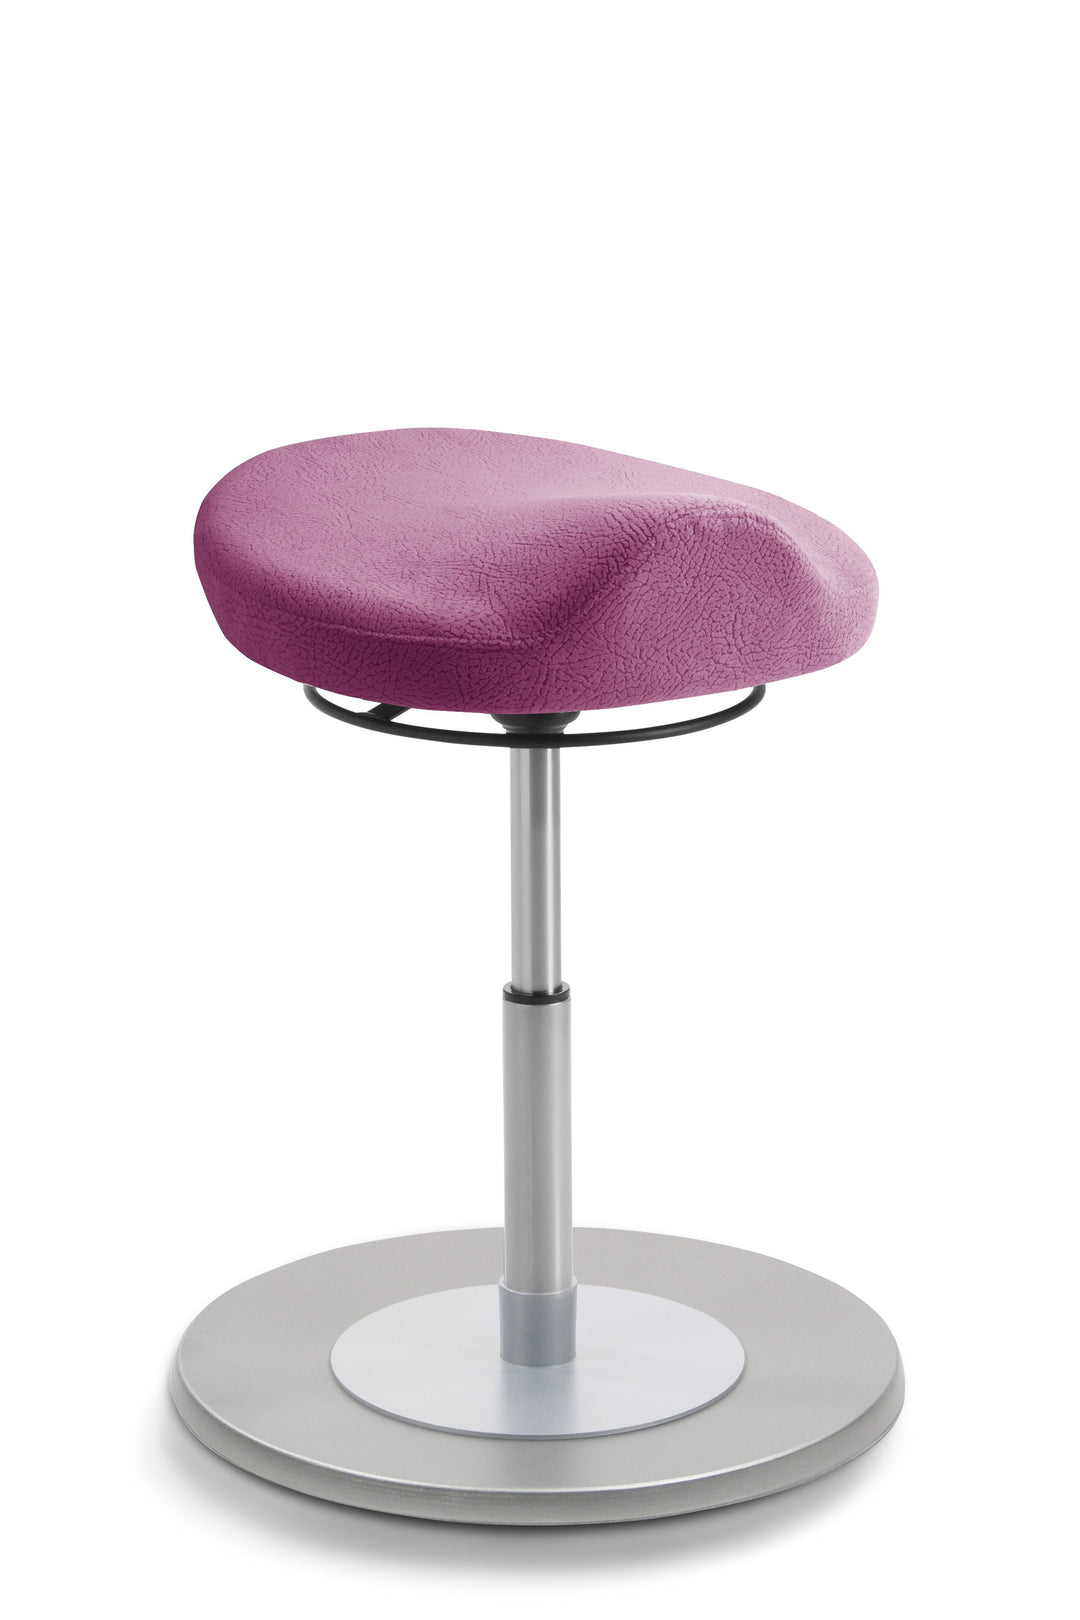 Mayer MyErgosit Taboret stołek balansujący Krzesło 3D 37-50cm podstawa srebrna 1102 EF